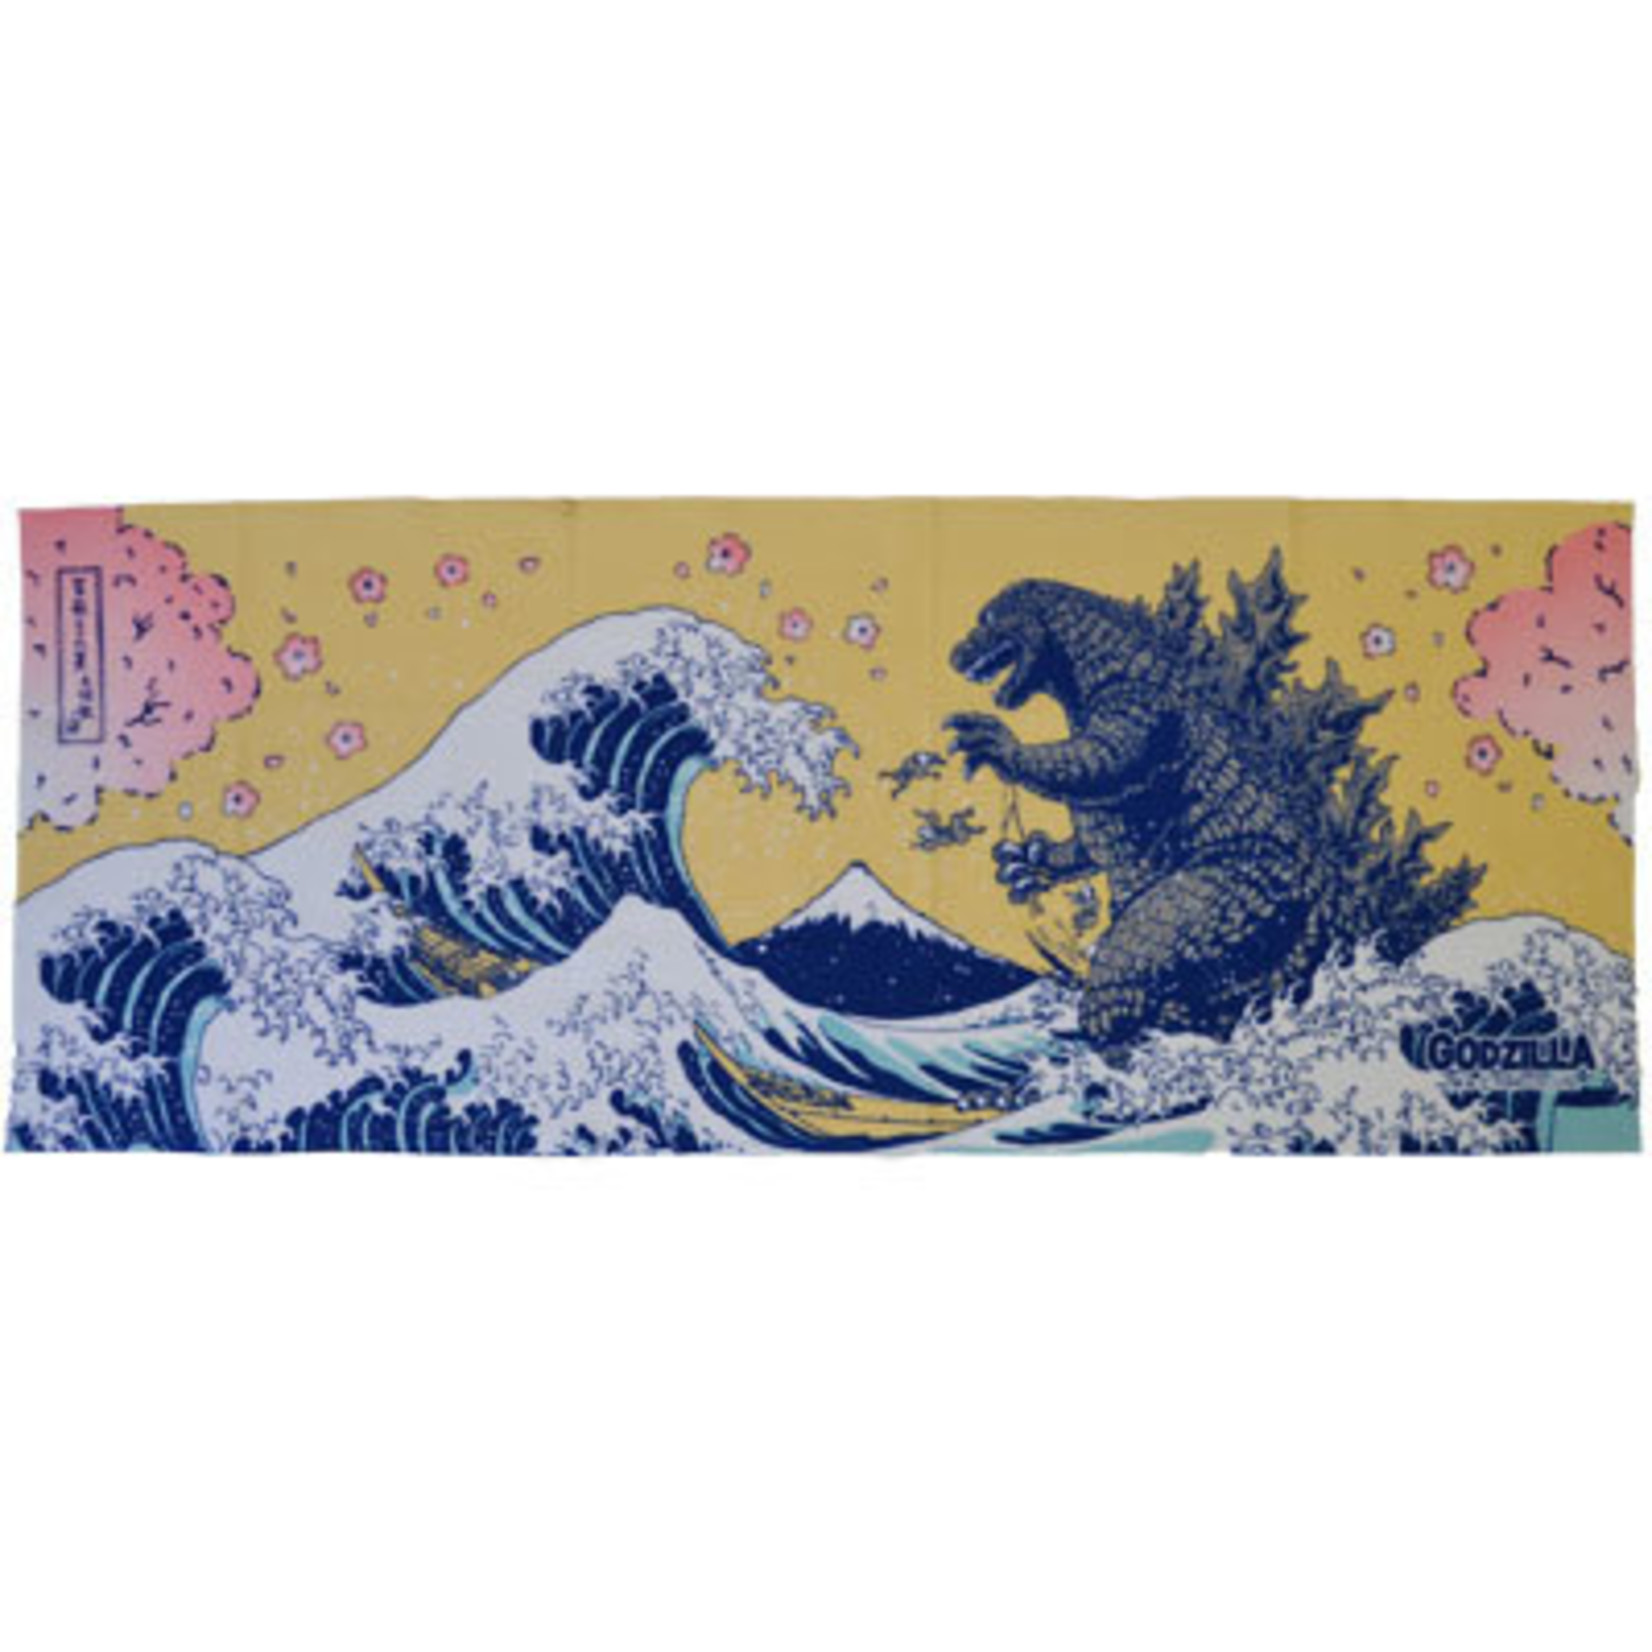 Tenugui - 36 Views of Tometake Large Monsters (Godzilla/Sakura)